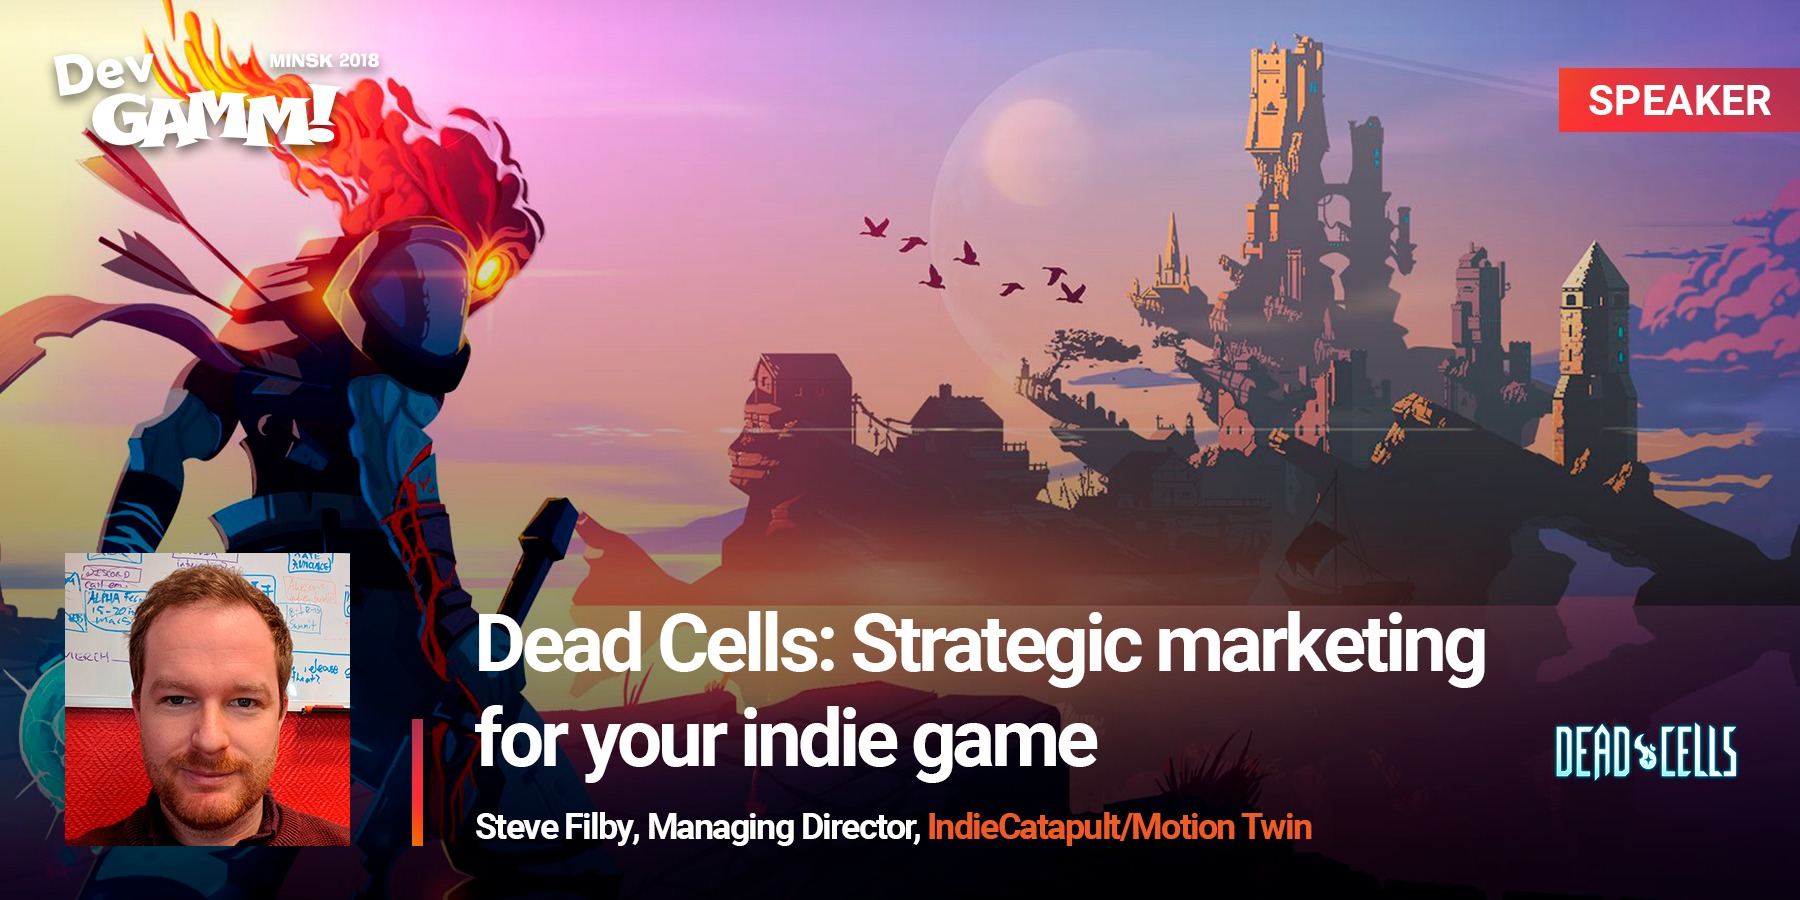 Steve Filby talks about Dead Cells marketing